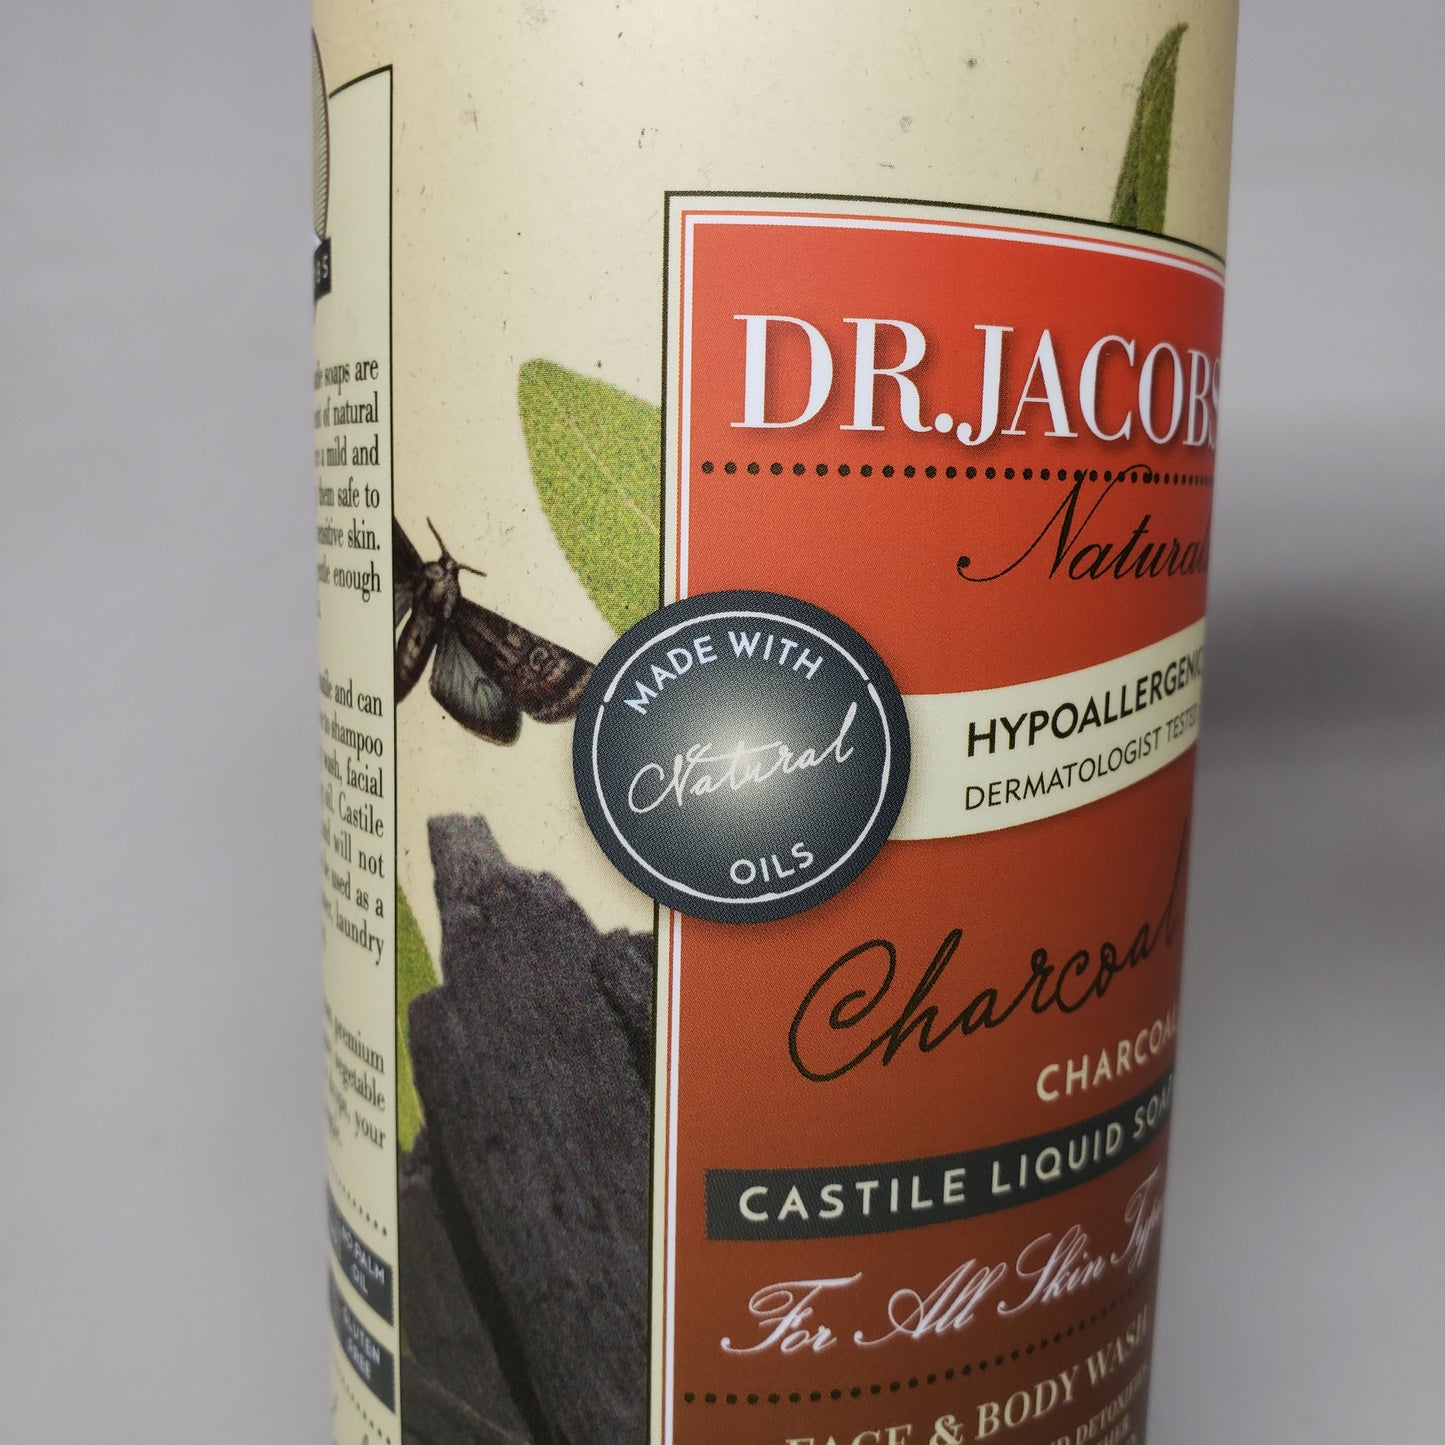 DR. JACOBS NATURALS Charcoal Castile Liquid Soap 32 oz Hypoallergenic (New)